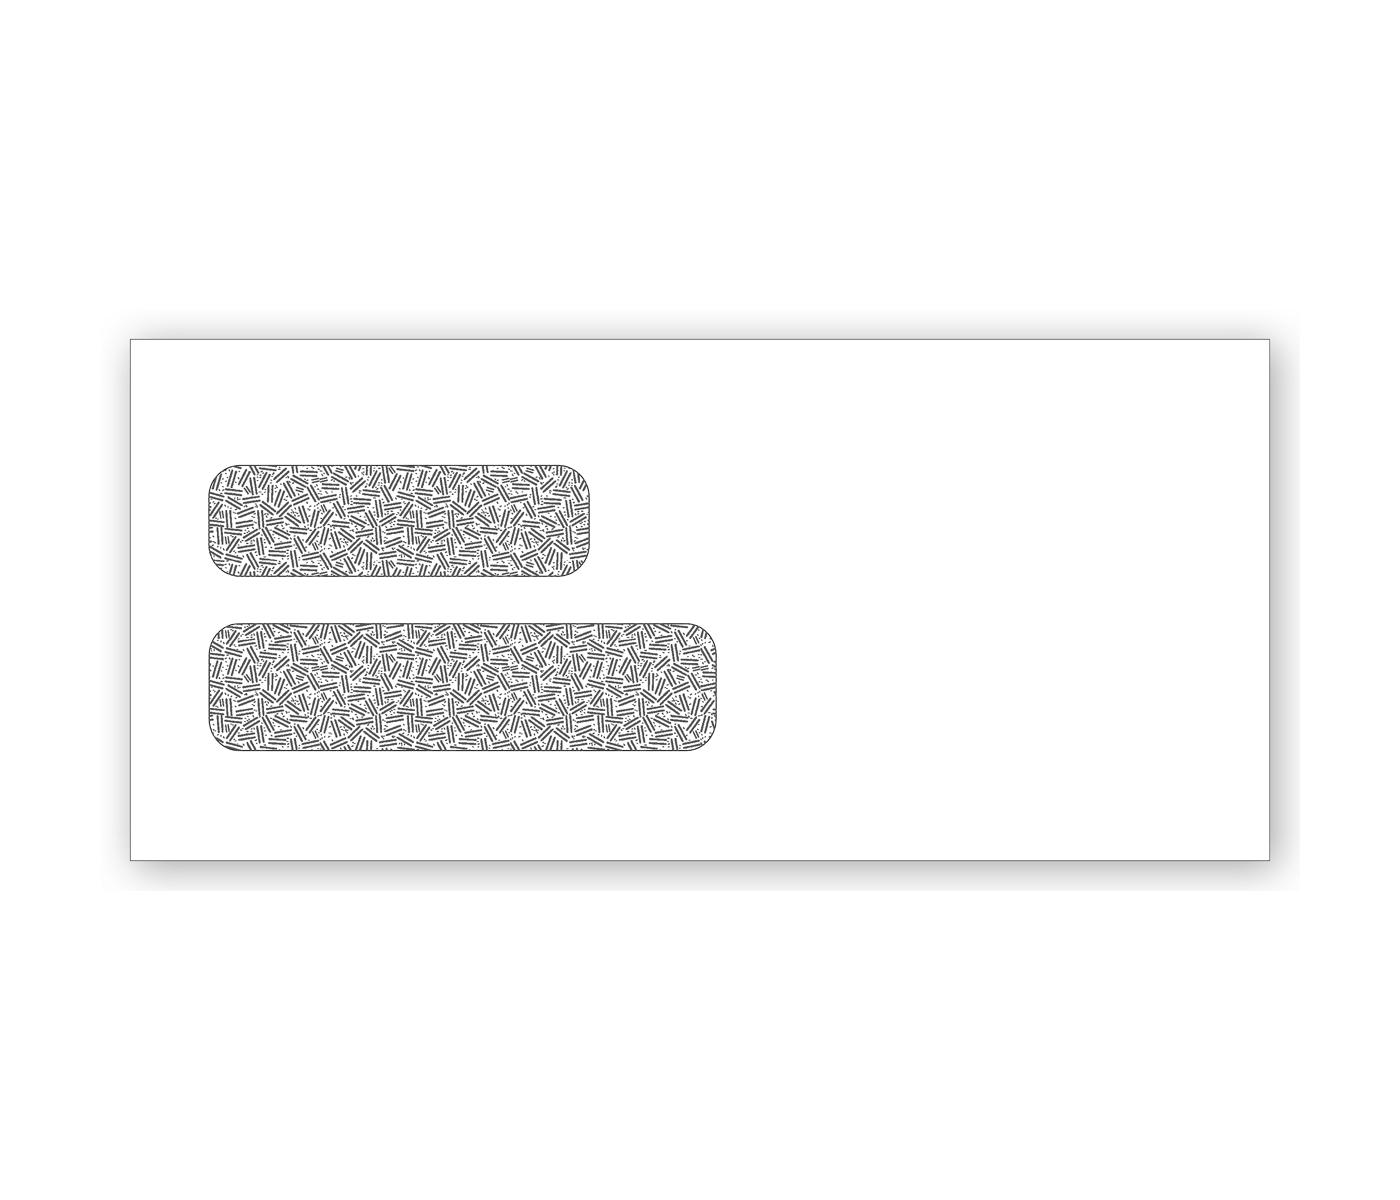 Confidential Double Window Envelopes 9 x 4-1/8